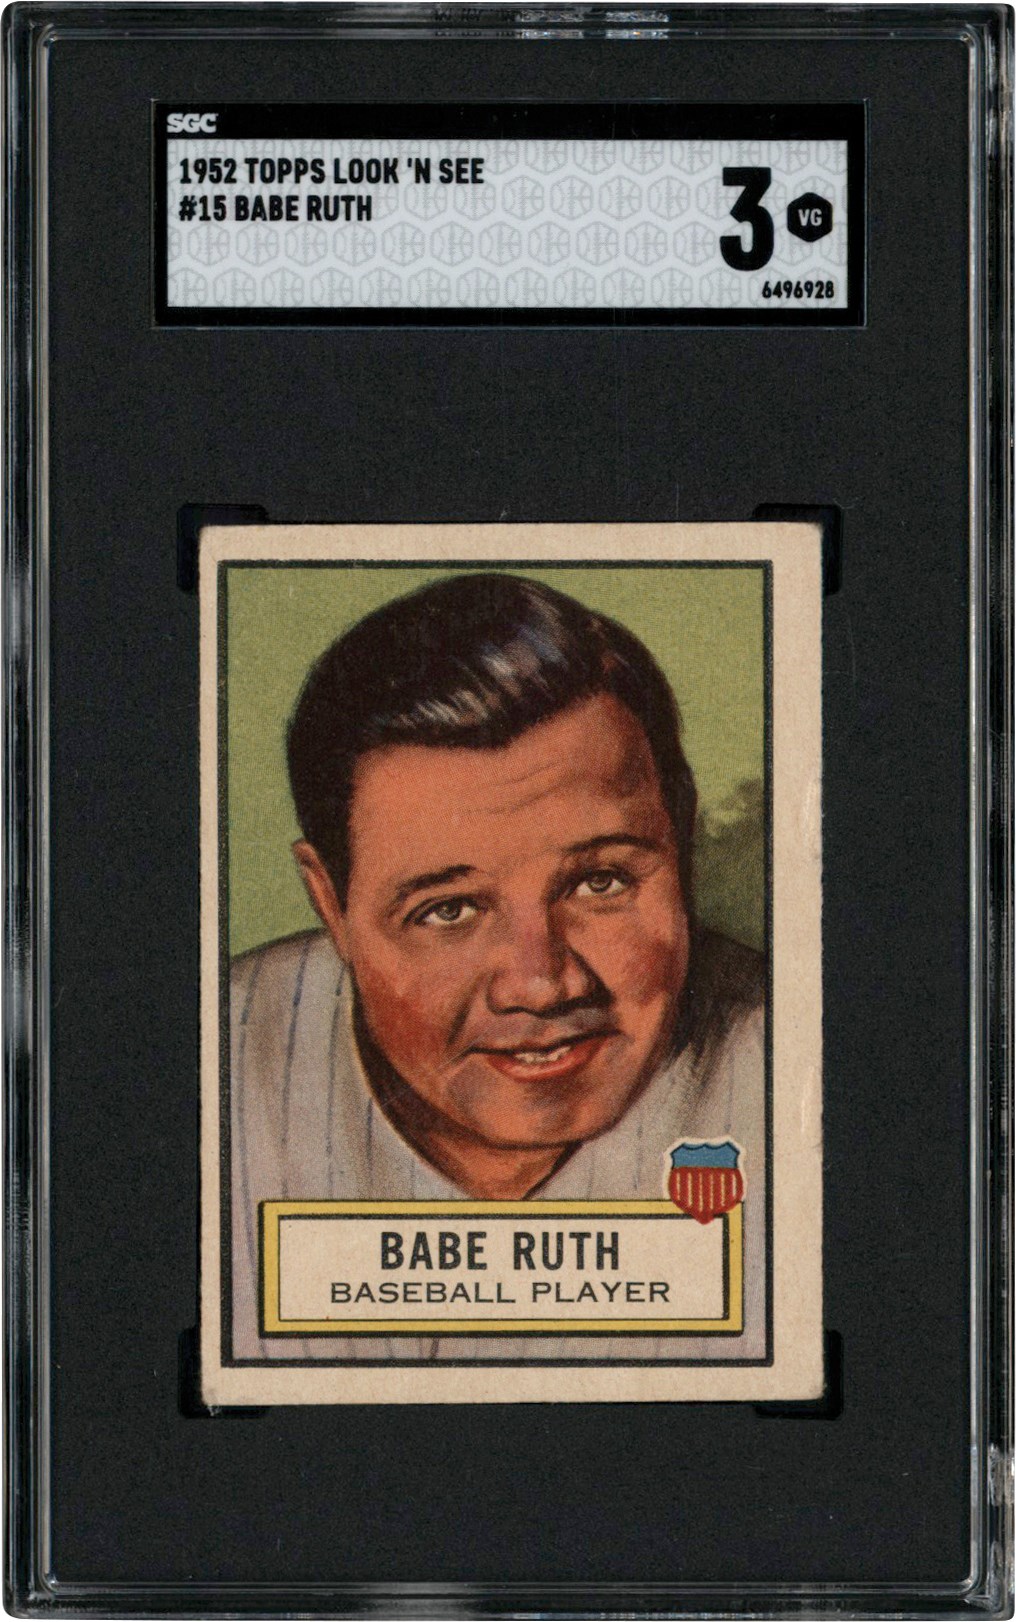 - 1952 Topps Look 'n See #15 Babe Ruth SGC VG 3